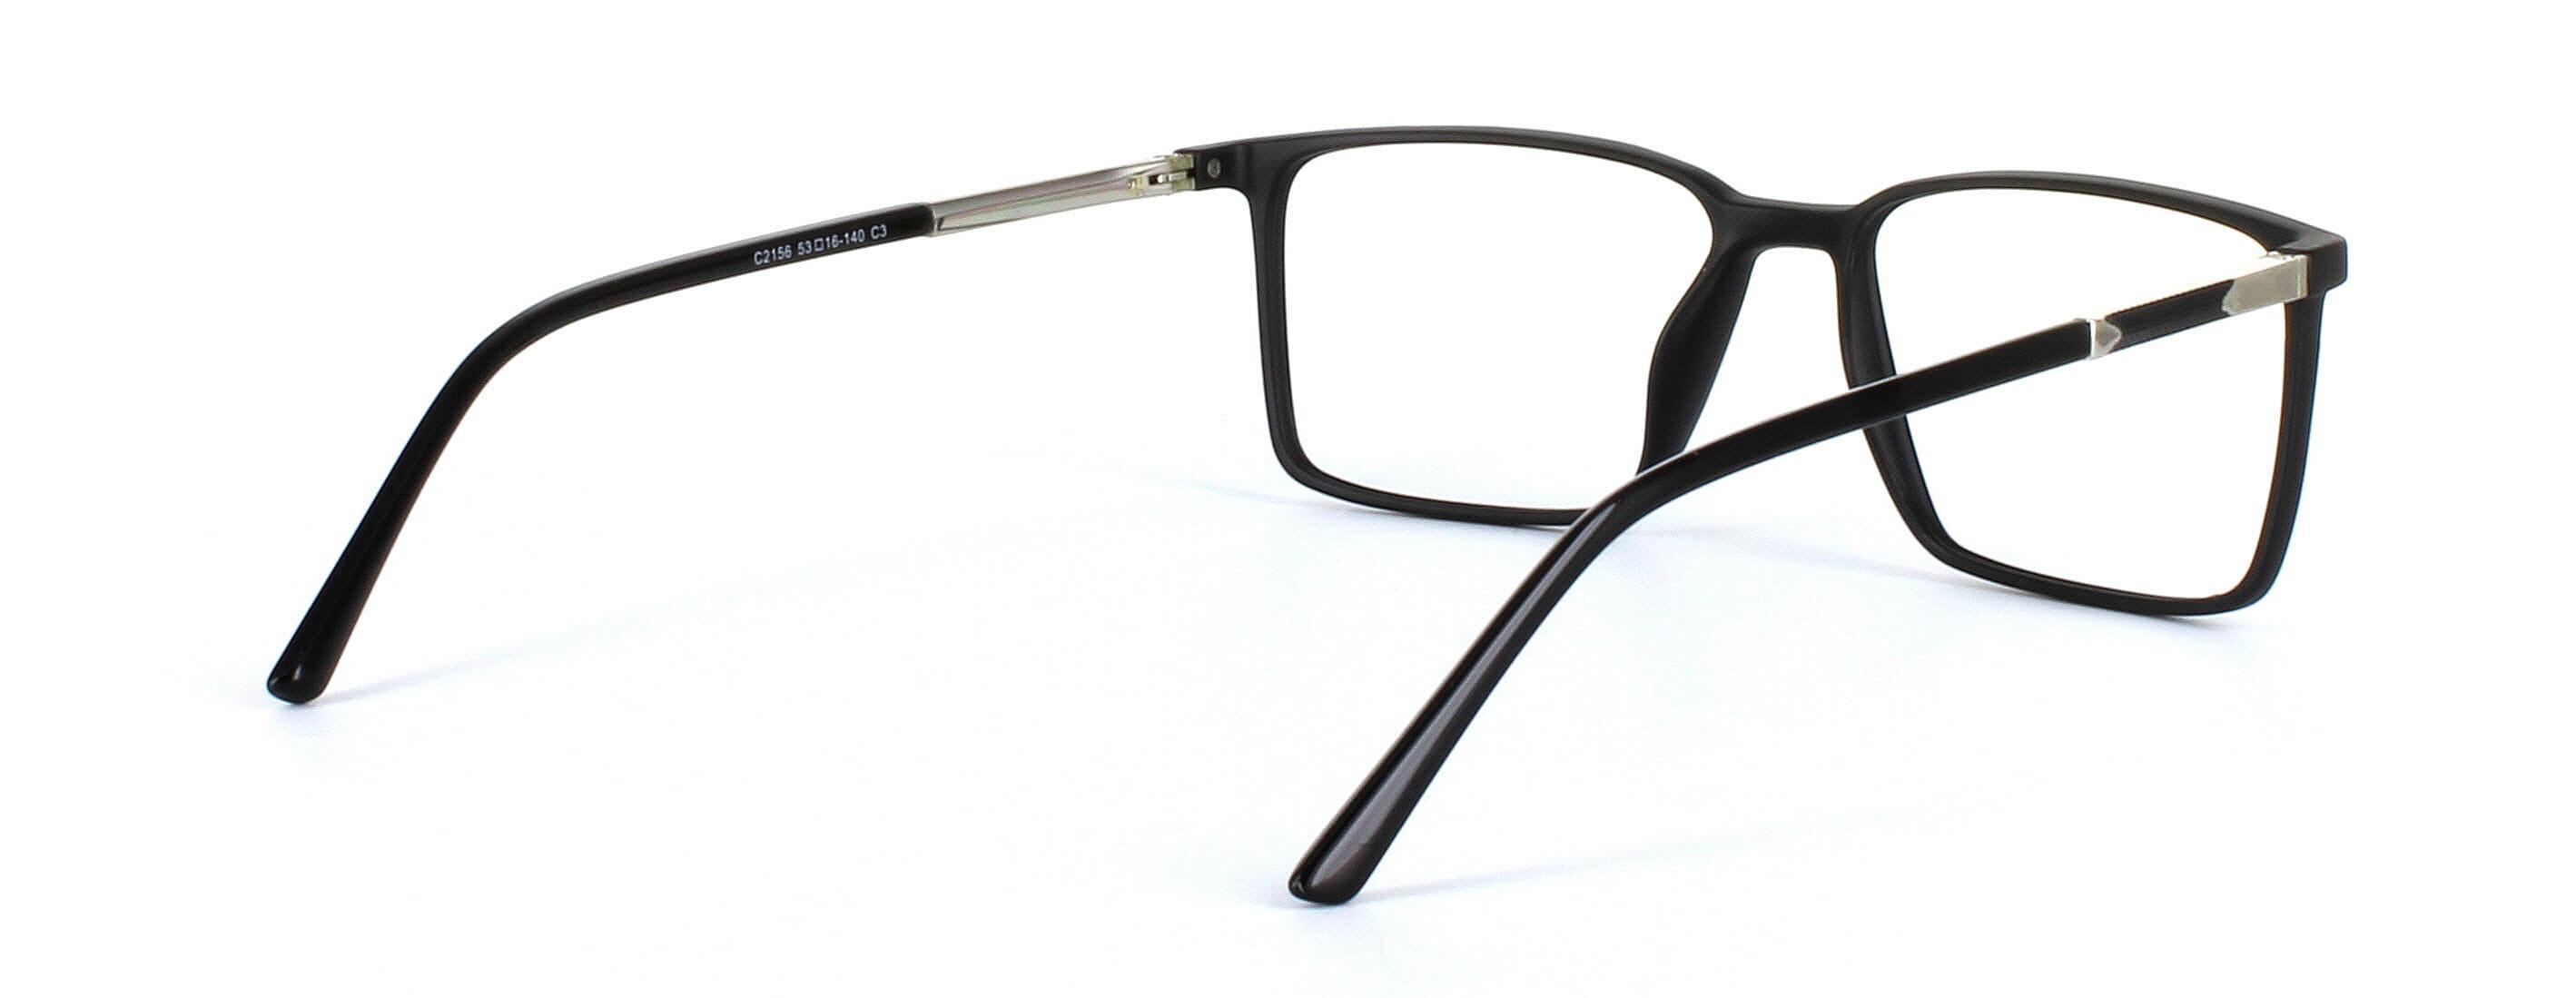 Preveza - Black unisex glasses - image view 4